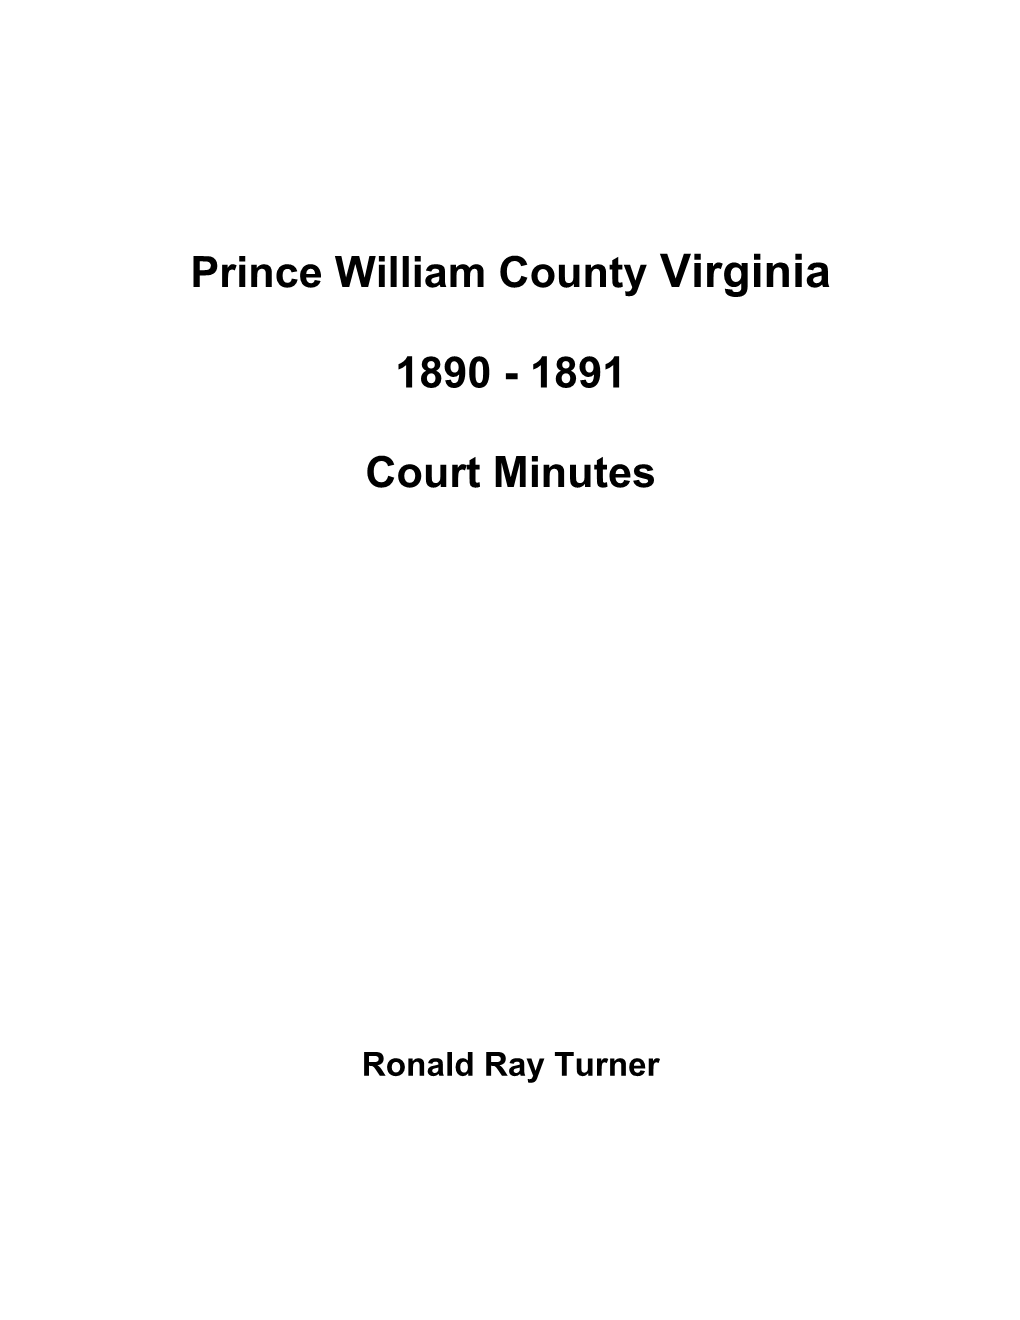 Court Minute Book - 1890